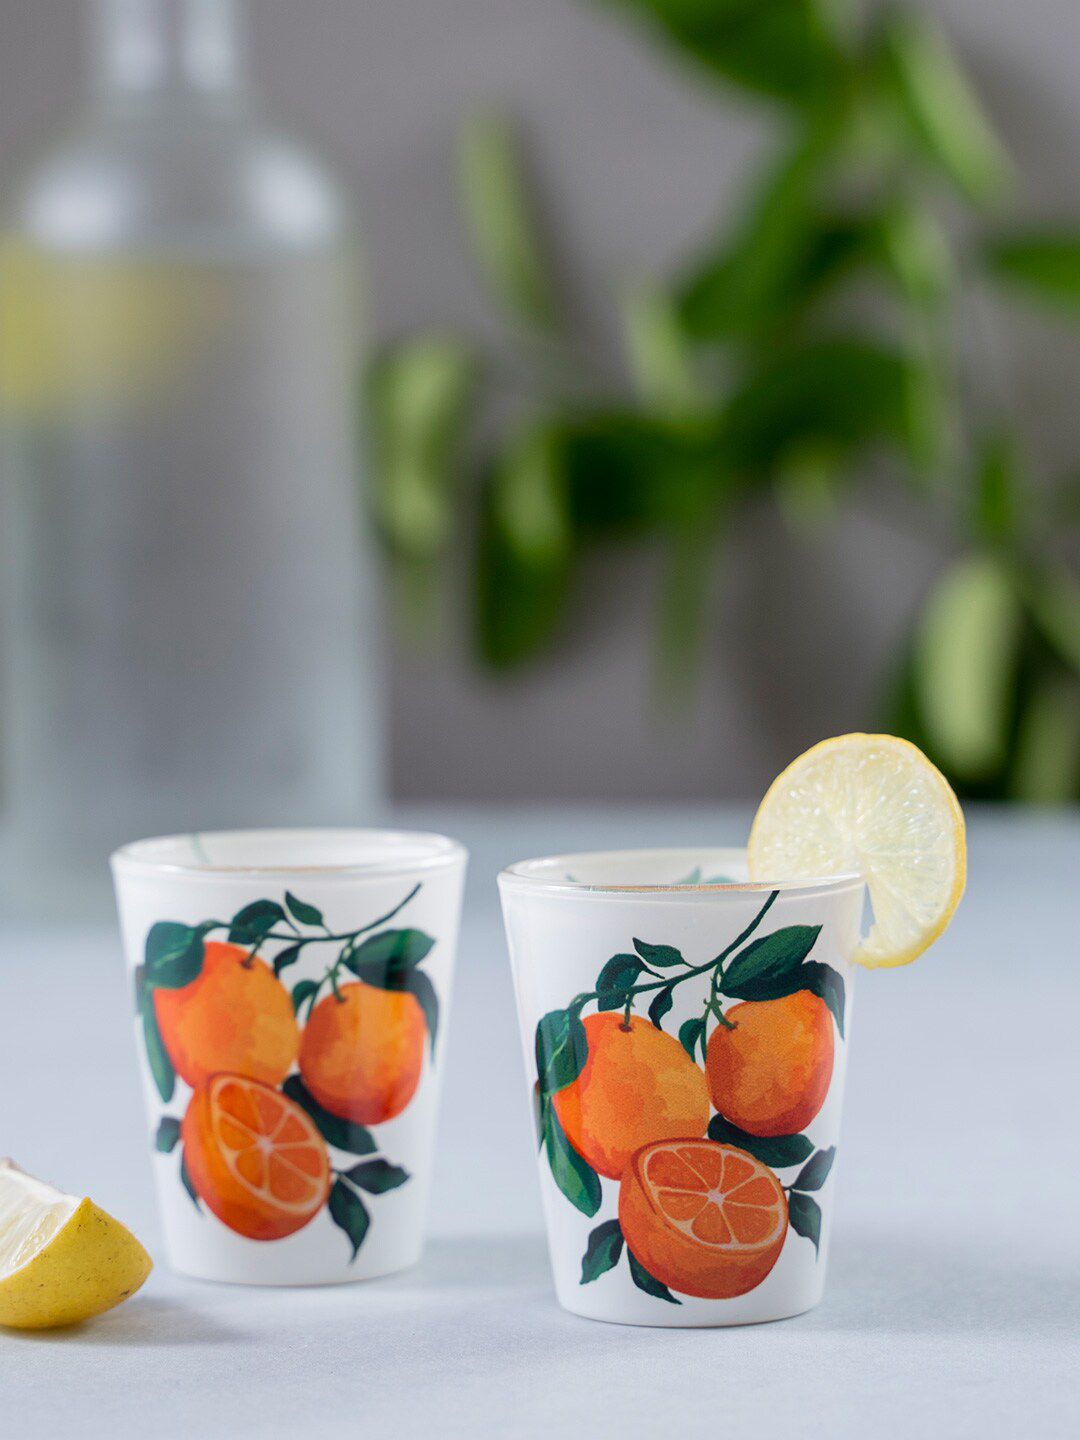 KOLOROBIA Set Of 2 White & Green Juicy Italian Oranges Shot Glasses 30 ml Price in India